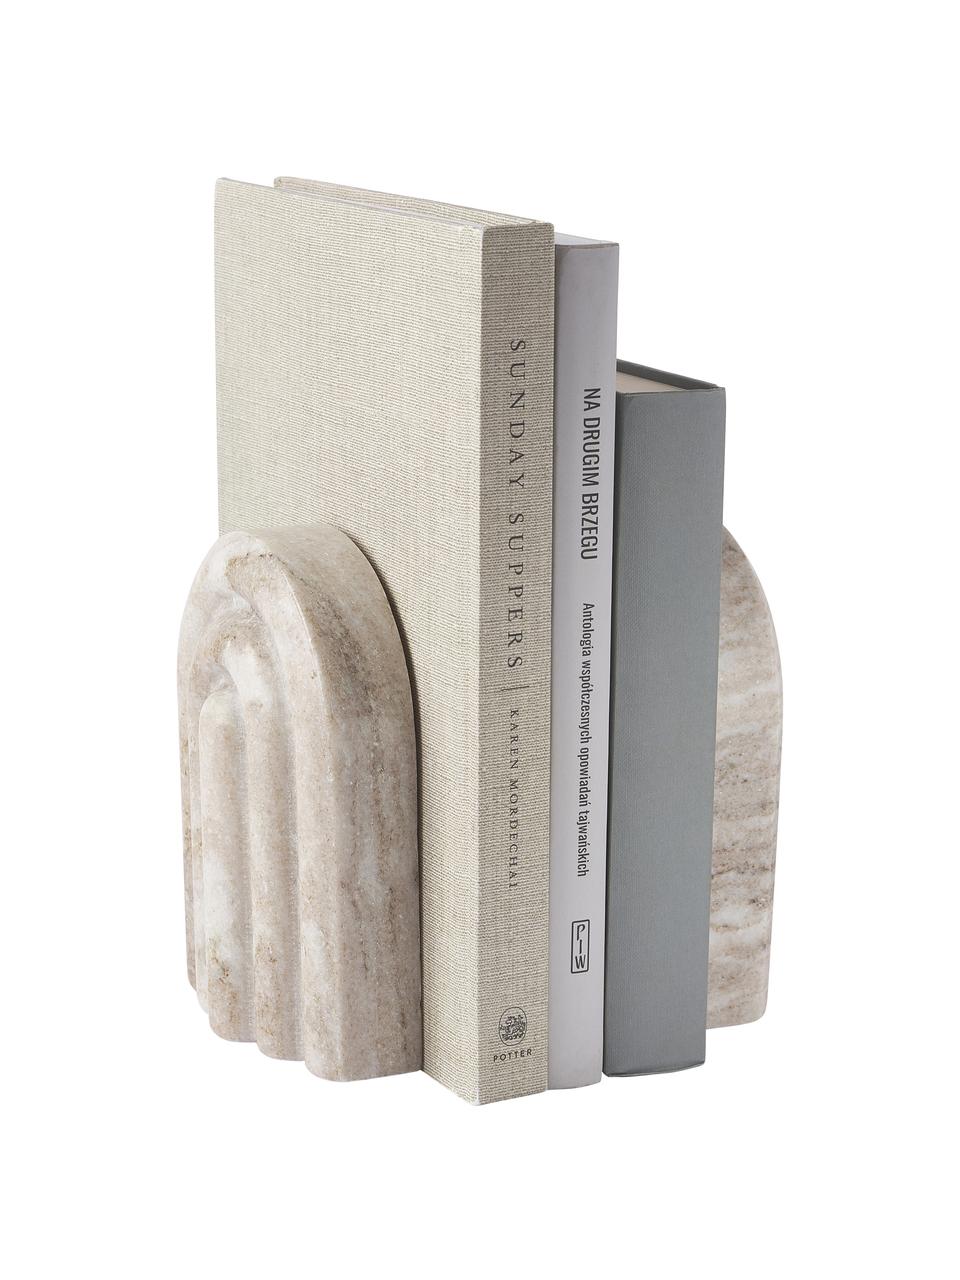 Marmor-Buchstützen Malie, 2 Stück, Marmor, Beige, marmoriert, B 12 cm x H 16 cm